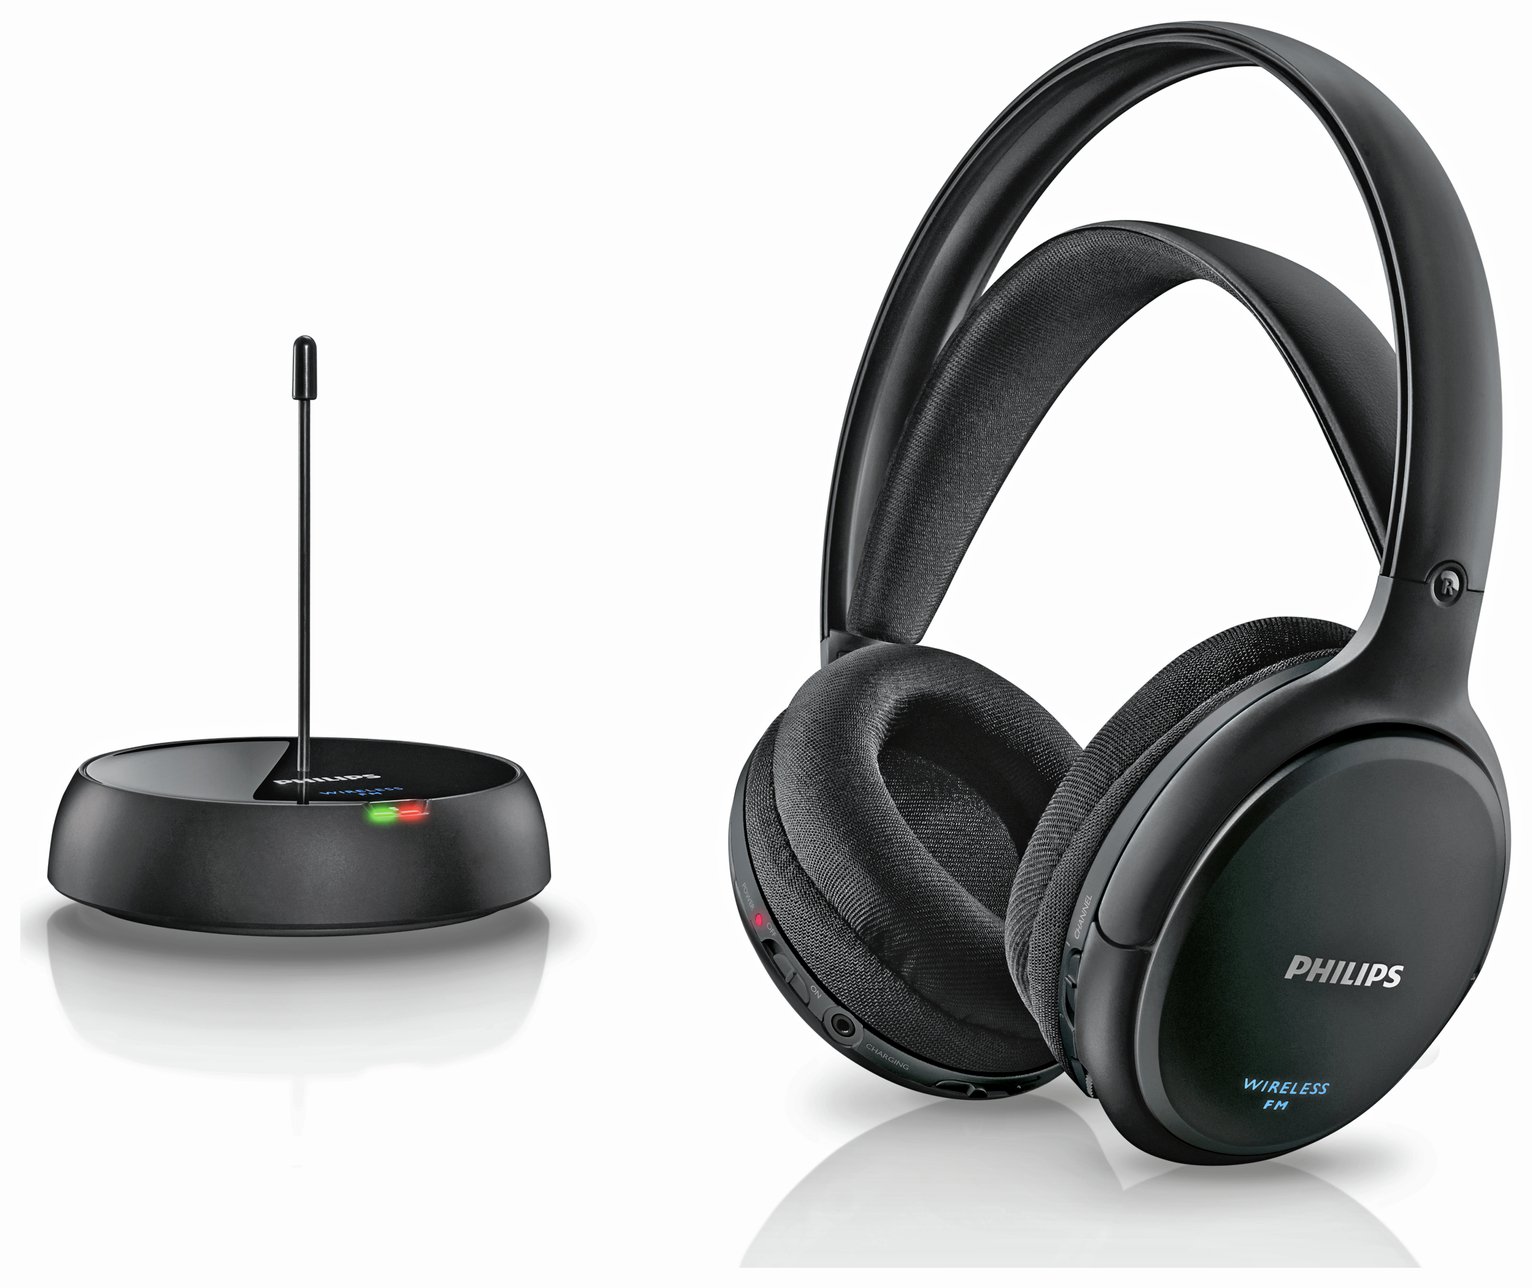 Philips SHC5200 Hi-Fi Wireless On-Ear Headphones Review